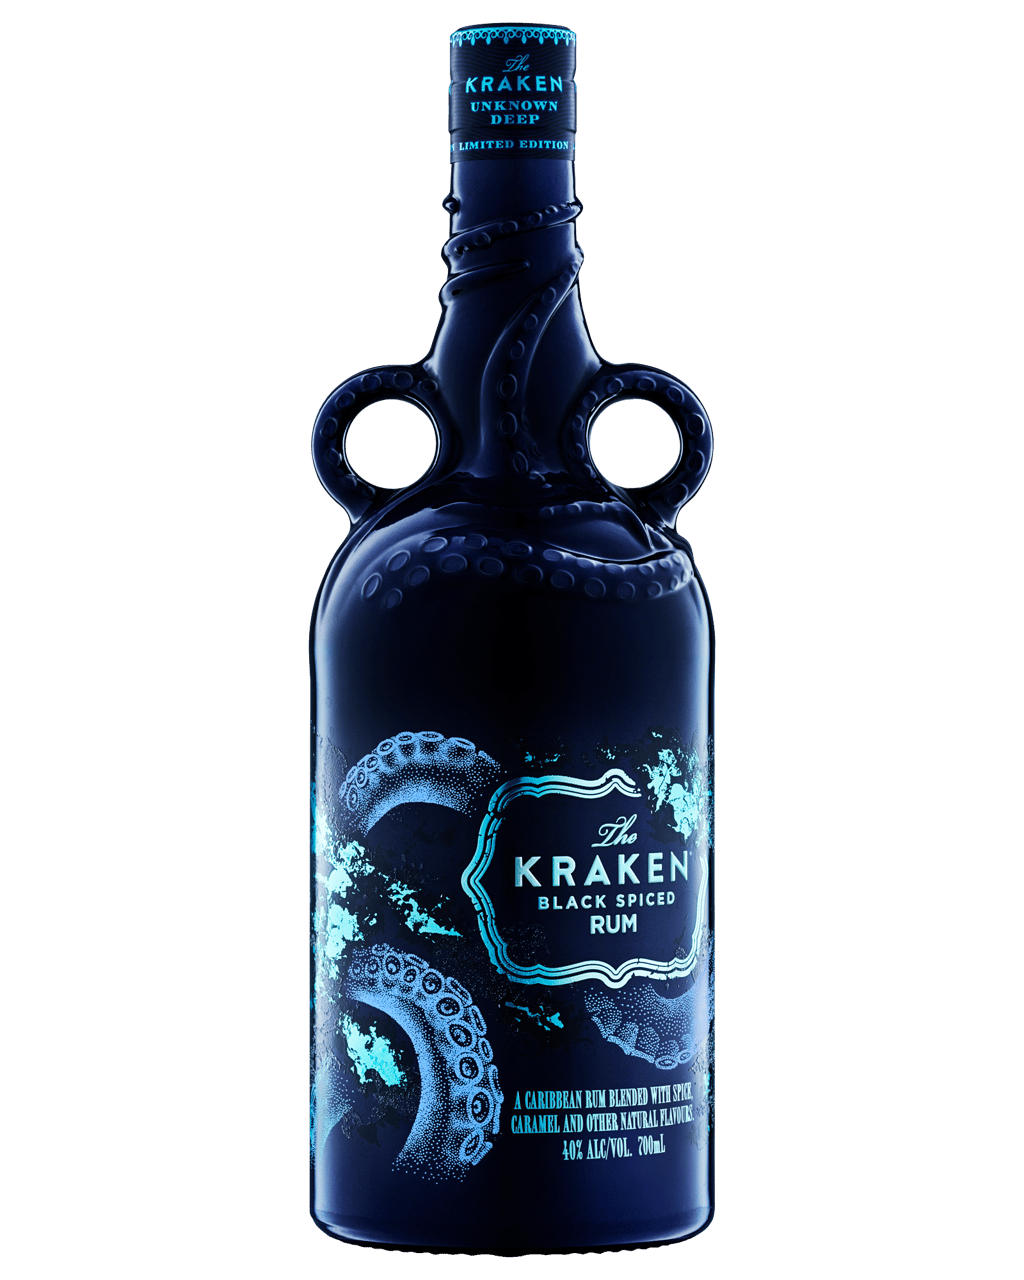 Kraken Black Spice Deep Sea Bioluminescence rum 0,7L 40%